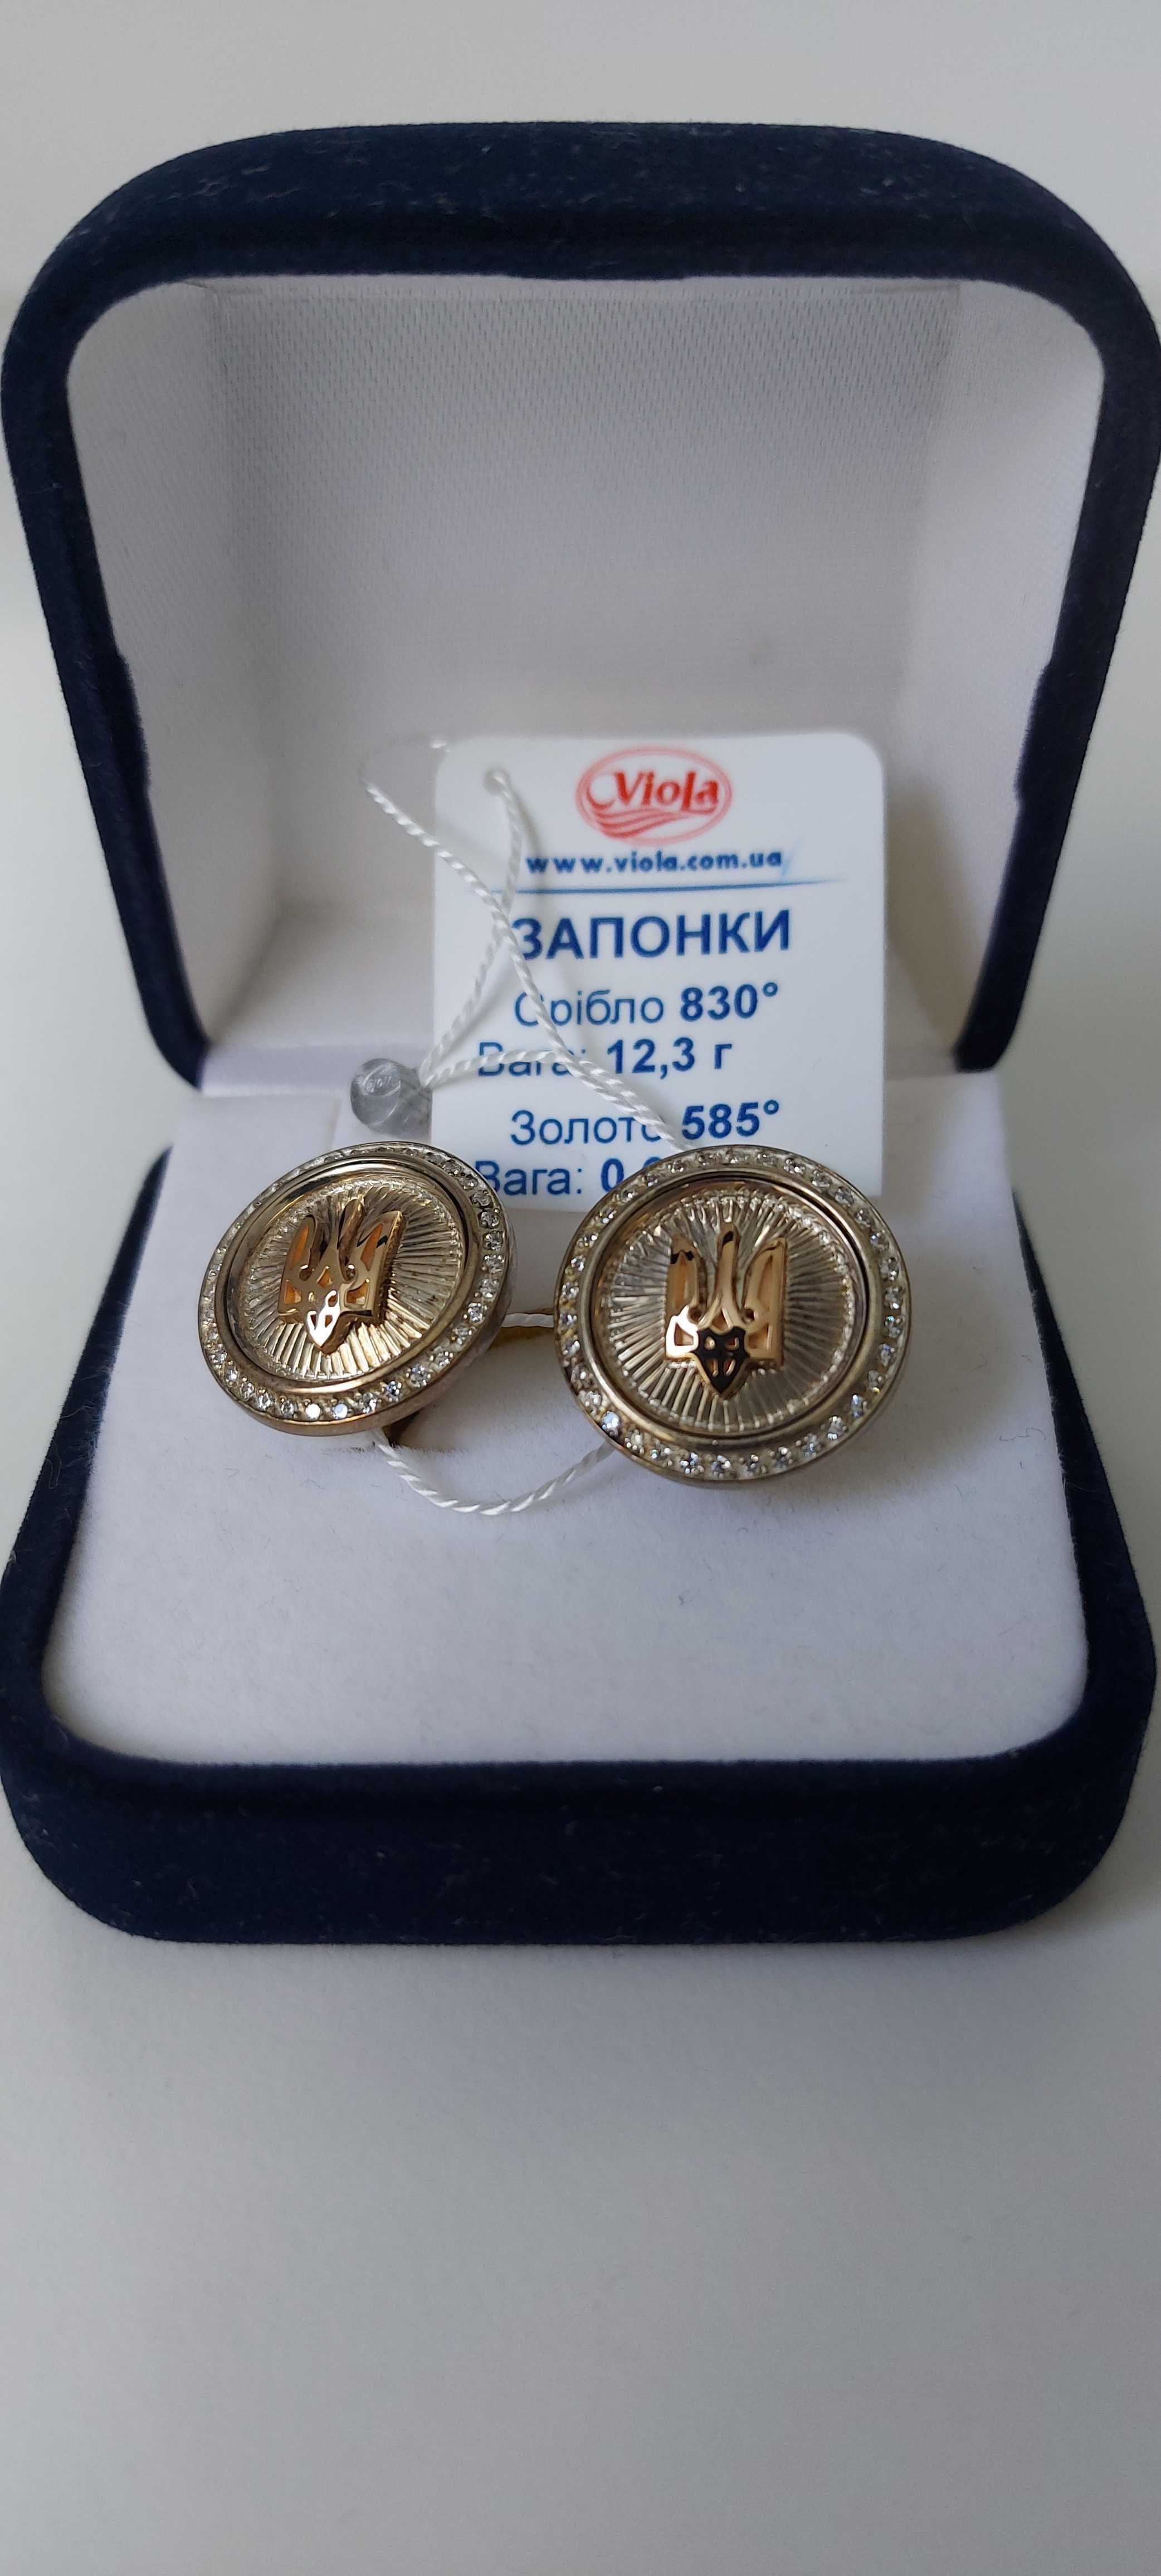 Запонки з гербом України срібло+золото